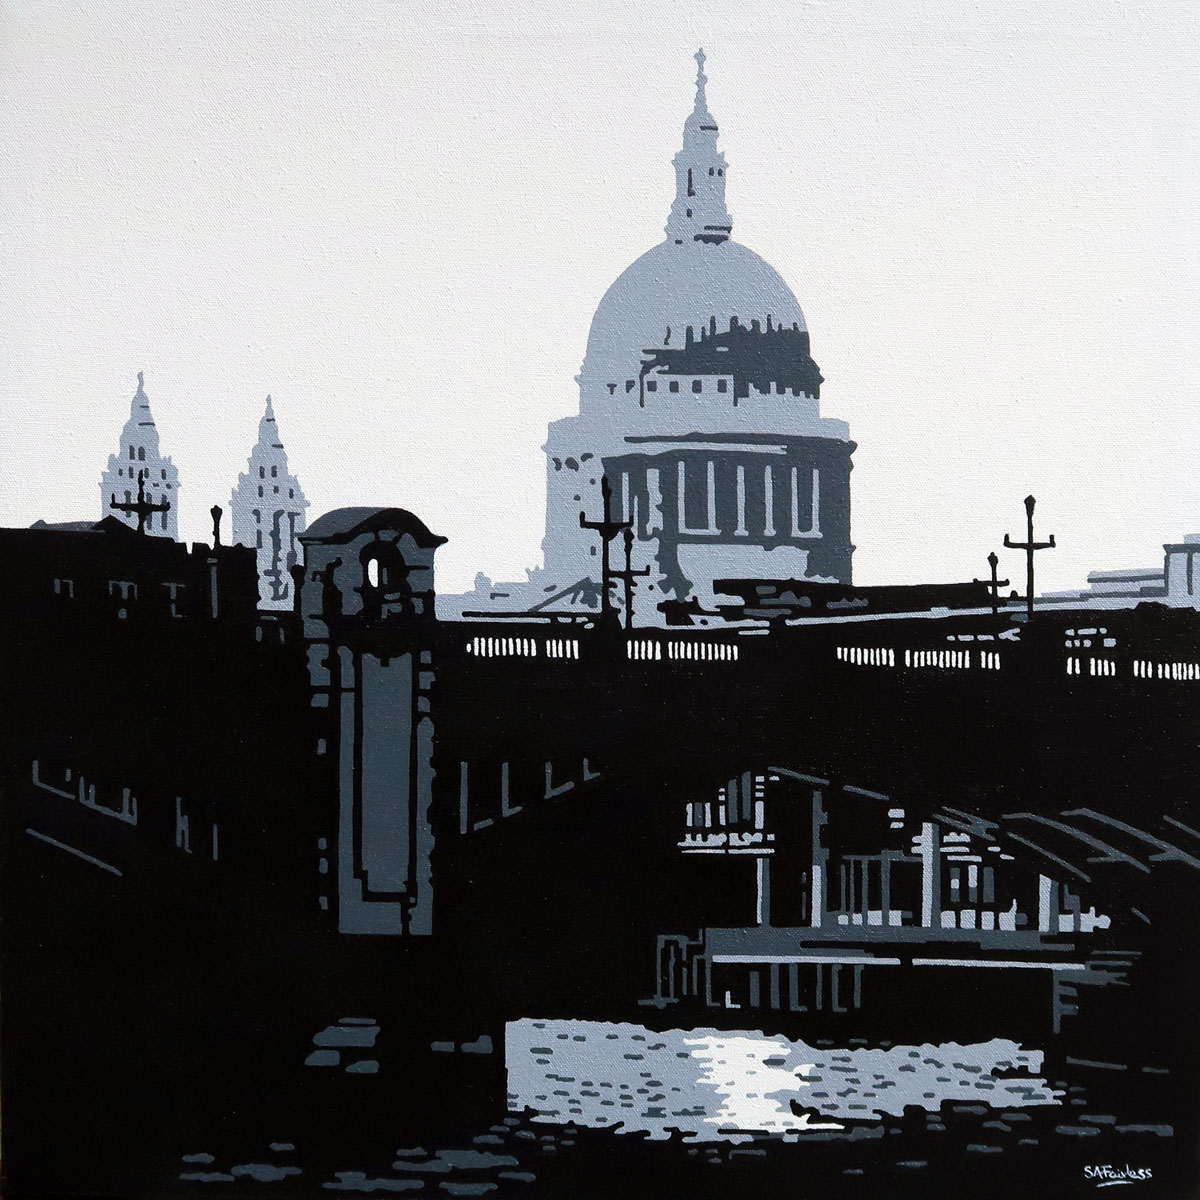 London Painting